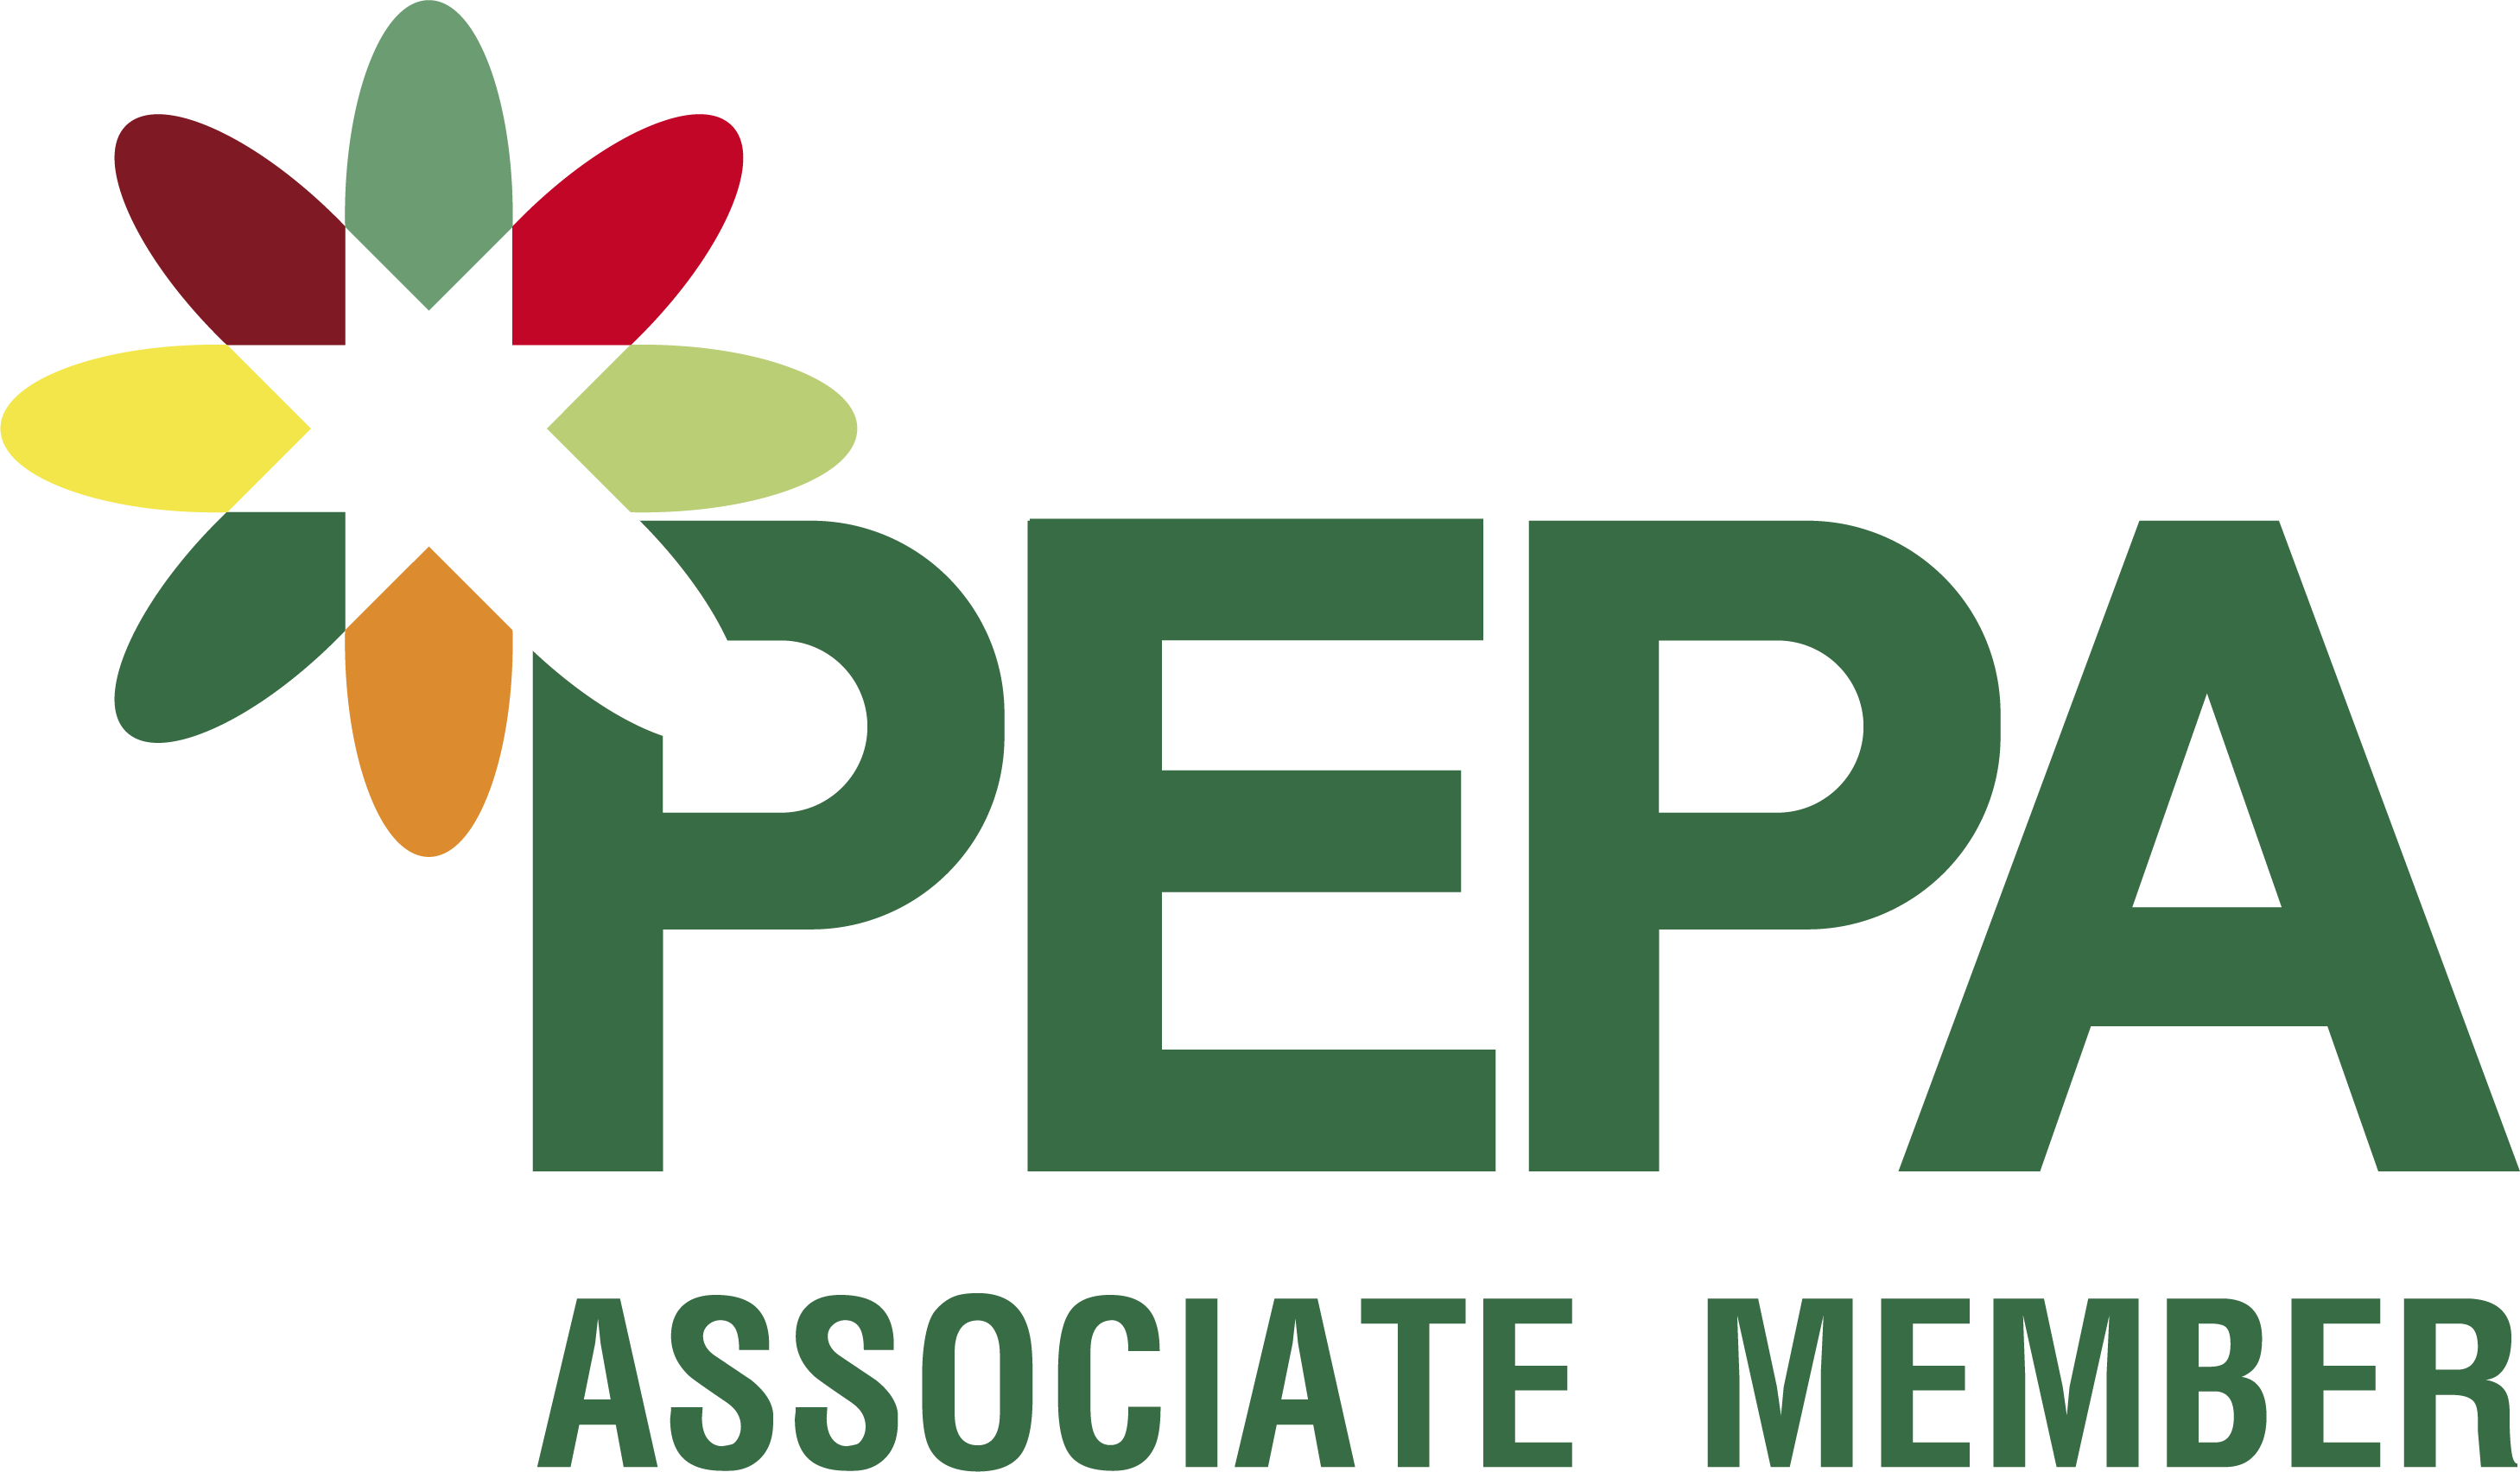 PEPA Associate Member logo